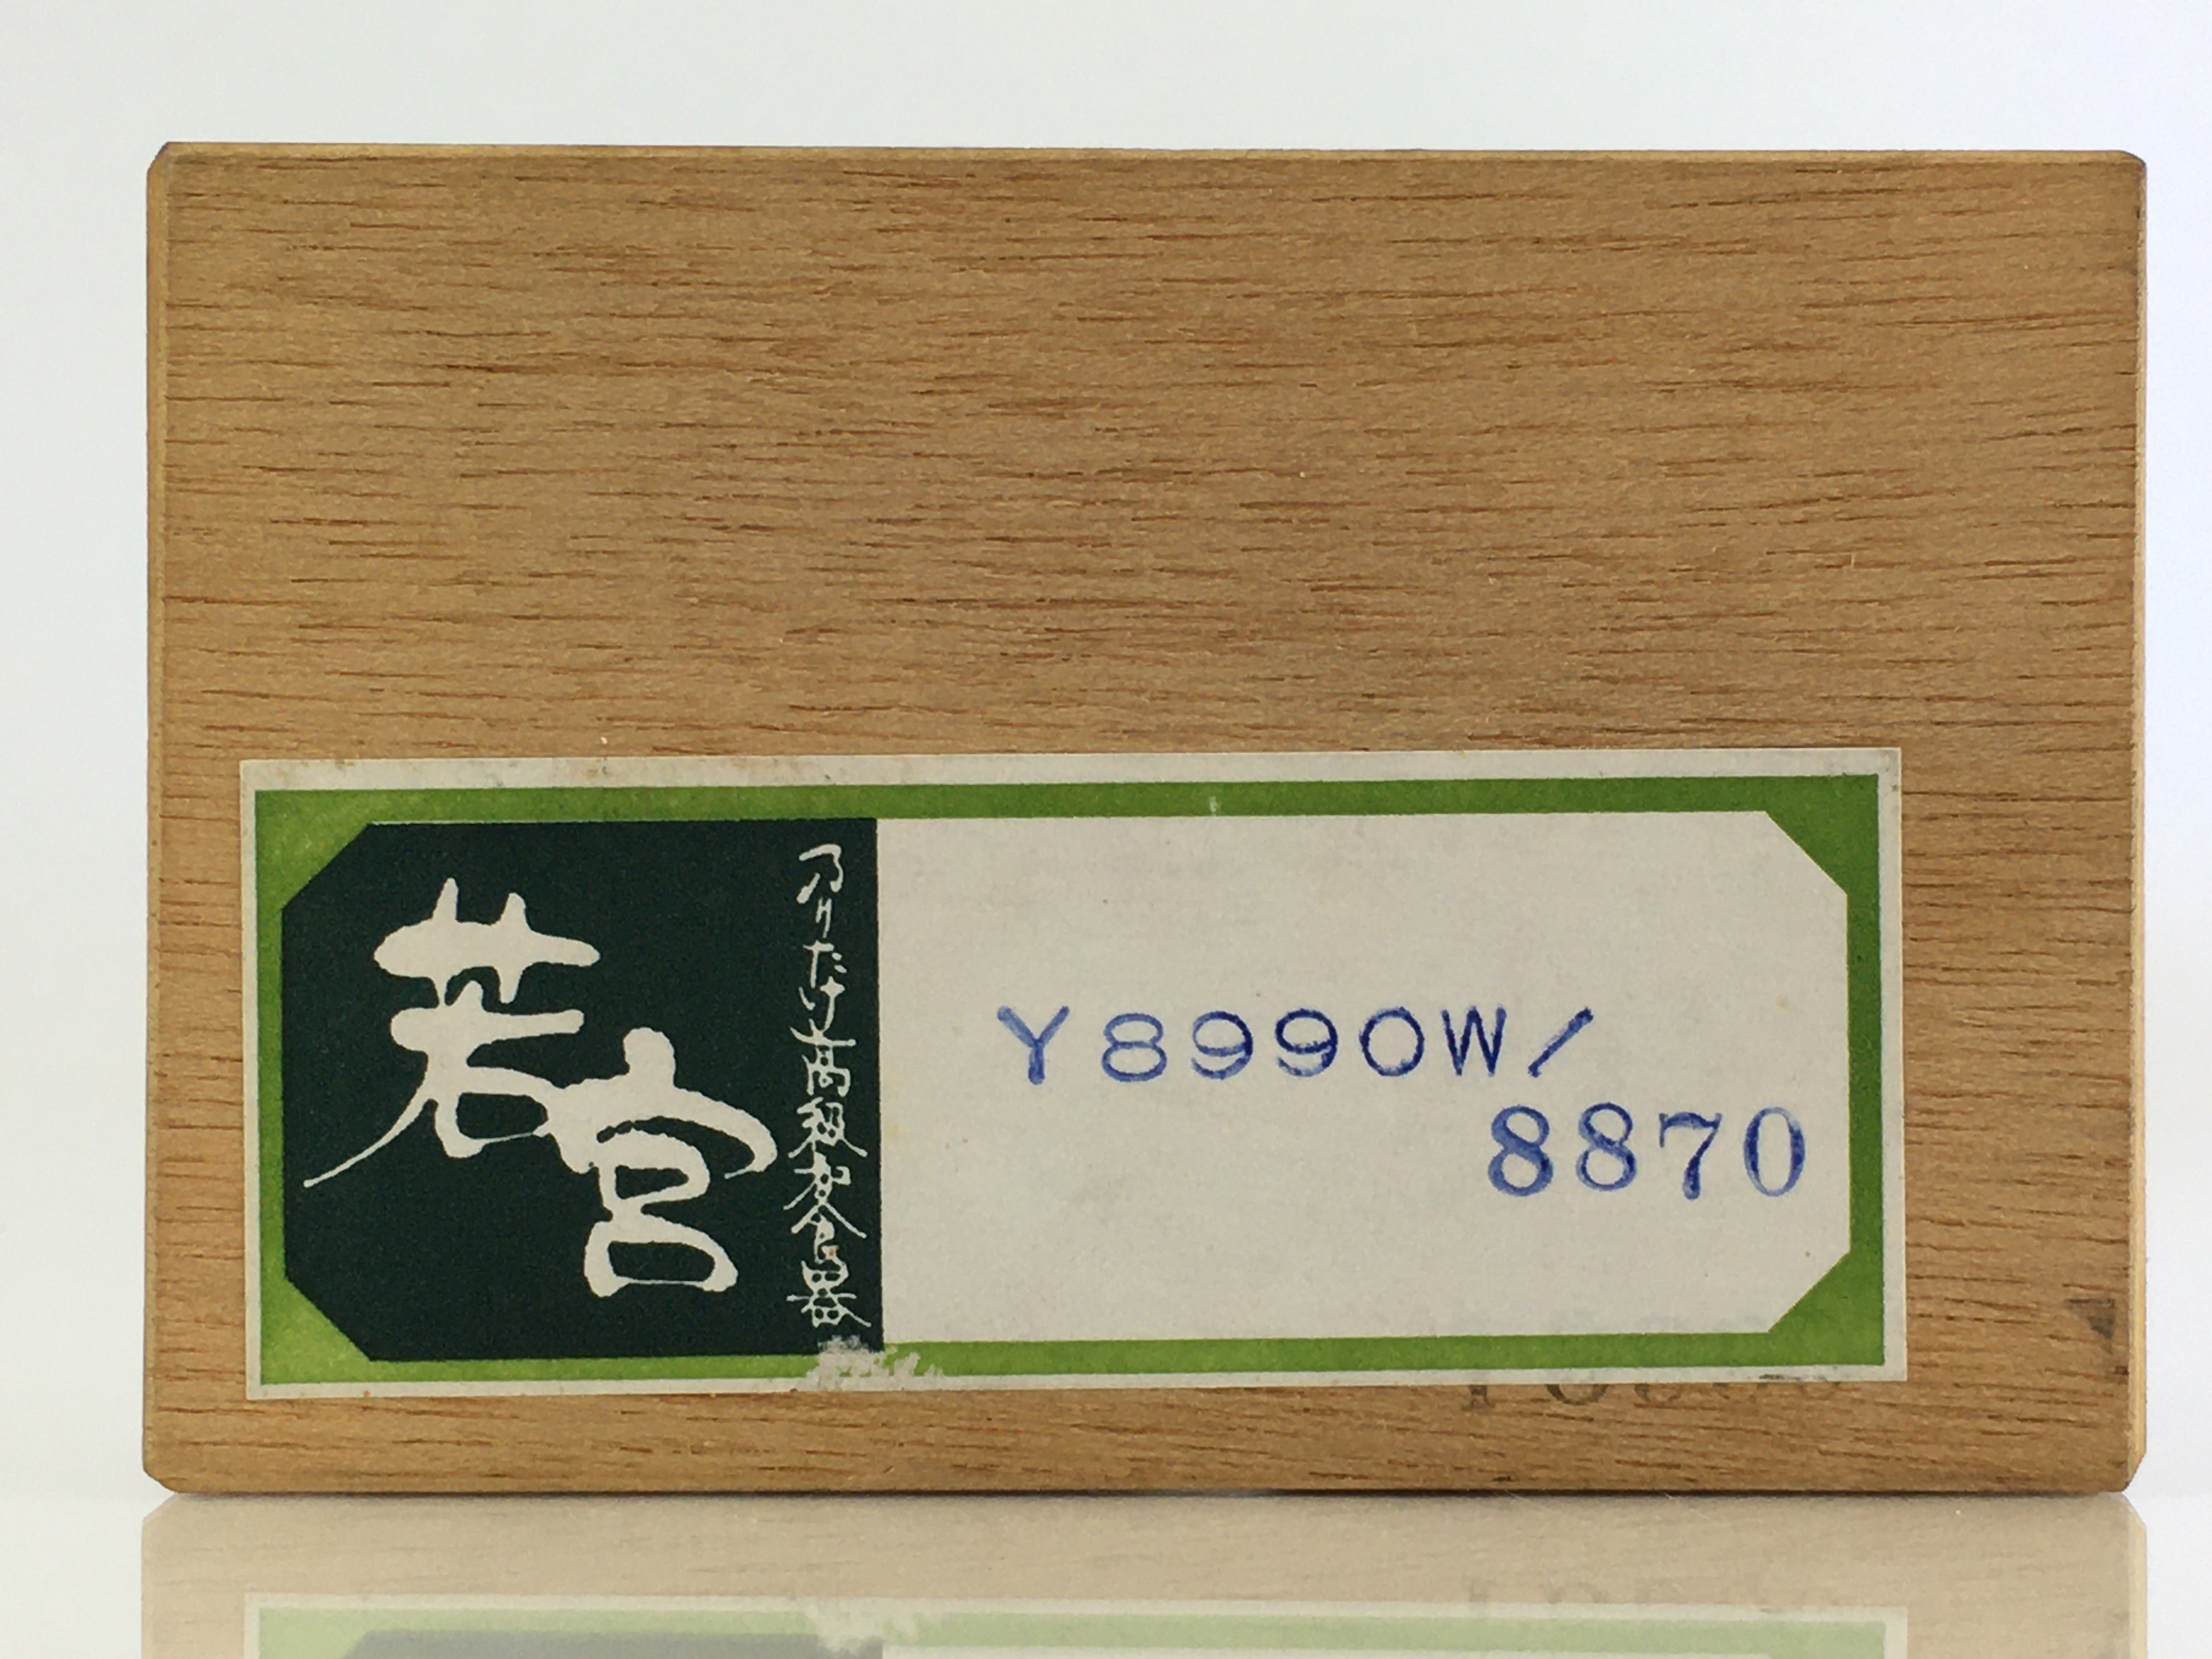 Japanese Wooden Boxed Porcelain Chopstick Rest 5pc Set Vtg Hashioki PX624